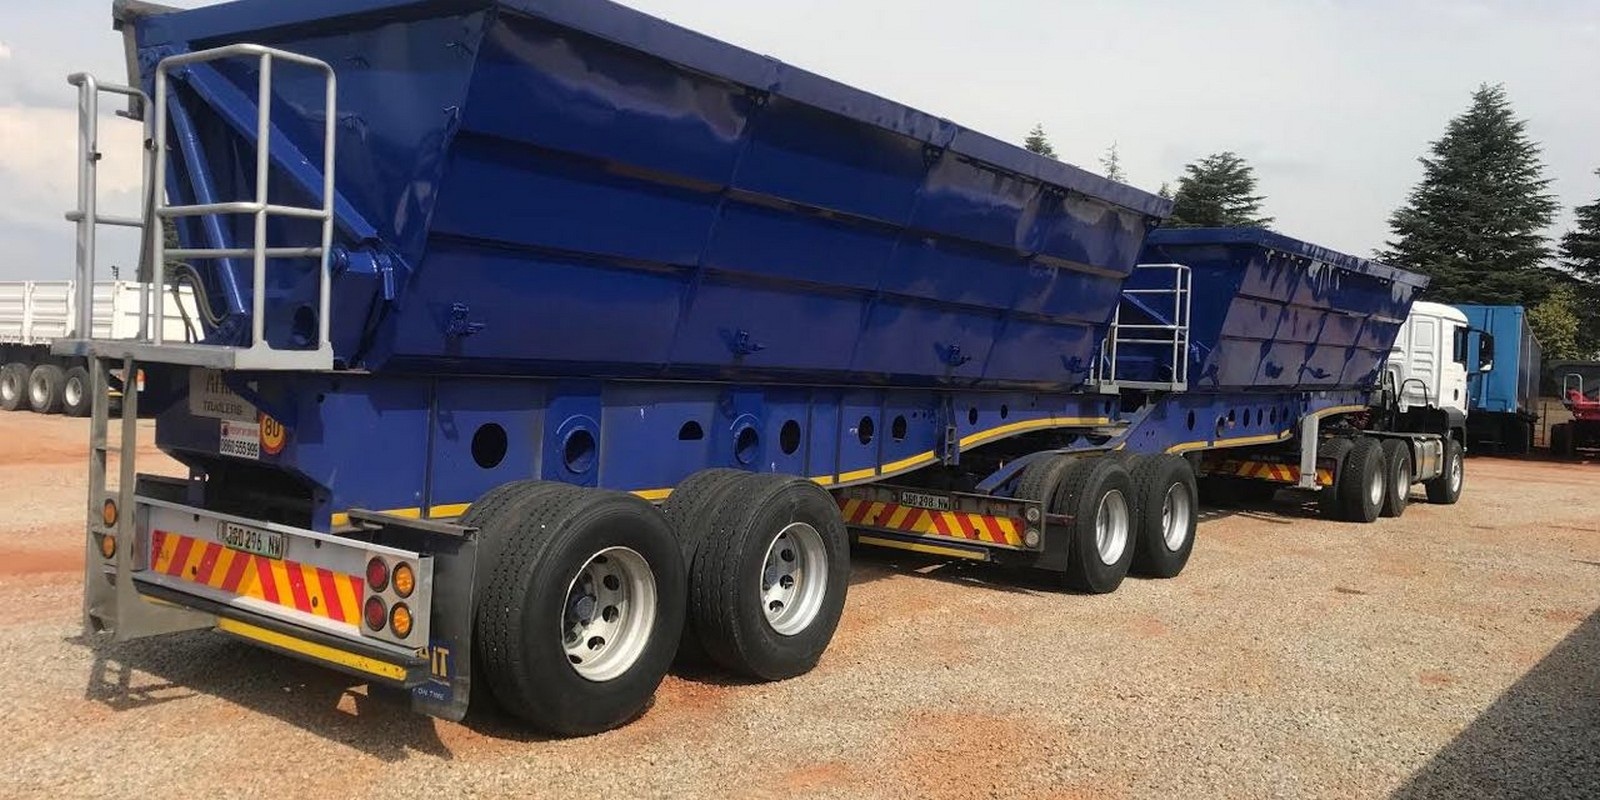 Start Your Own Trucking Business, 34 Ton Side Tippers, Become A Trucker, Johannesburg, Gauteng Province, South Africa